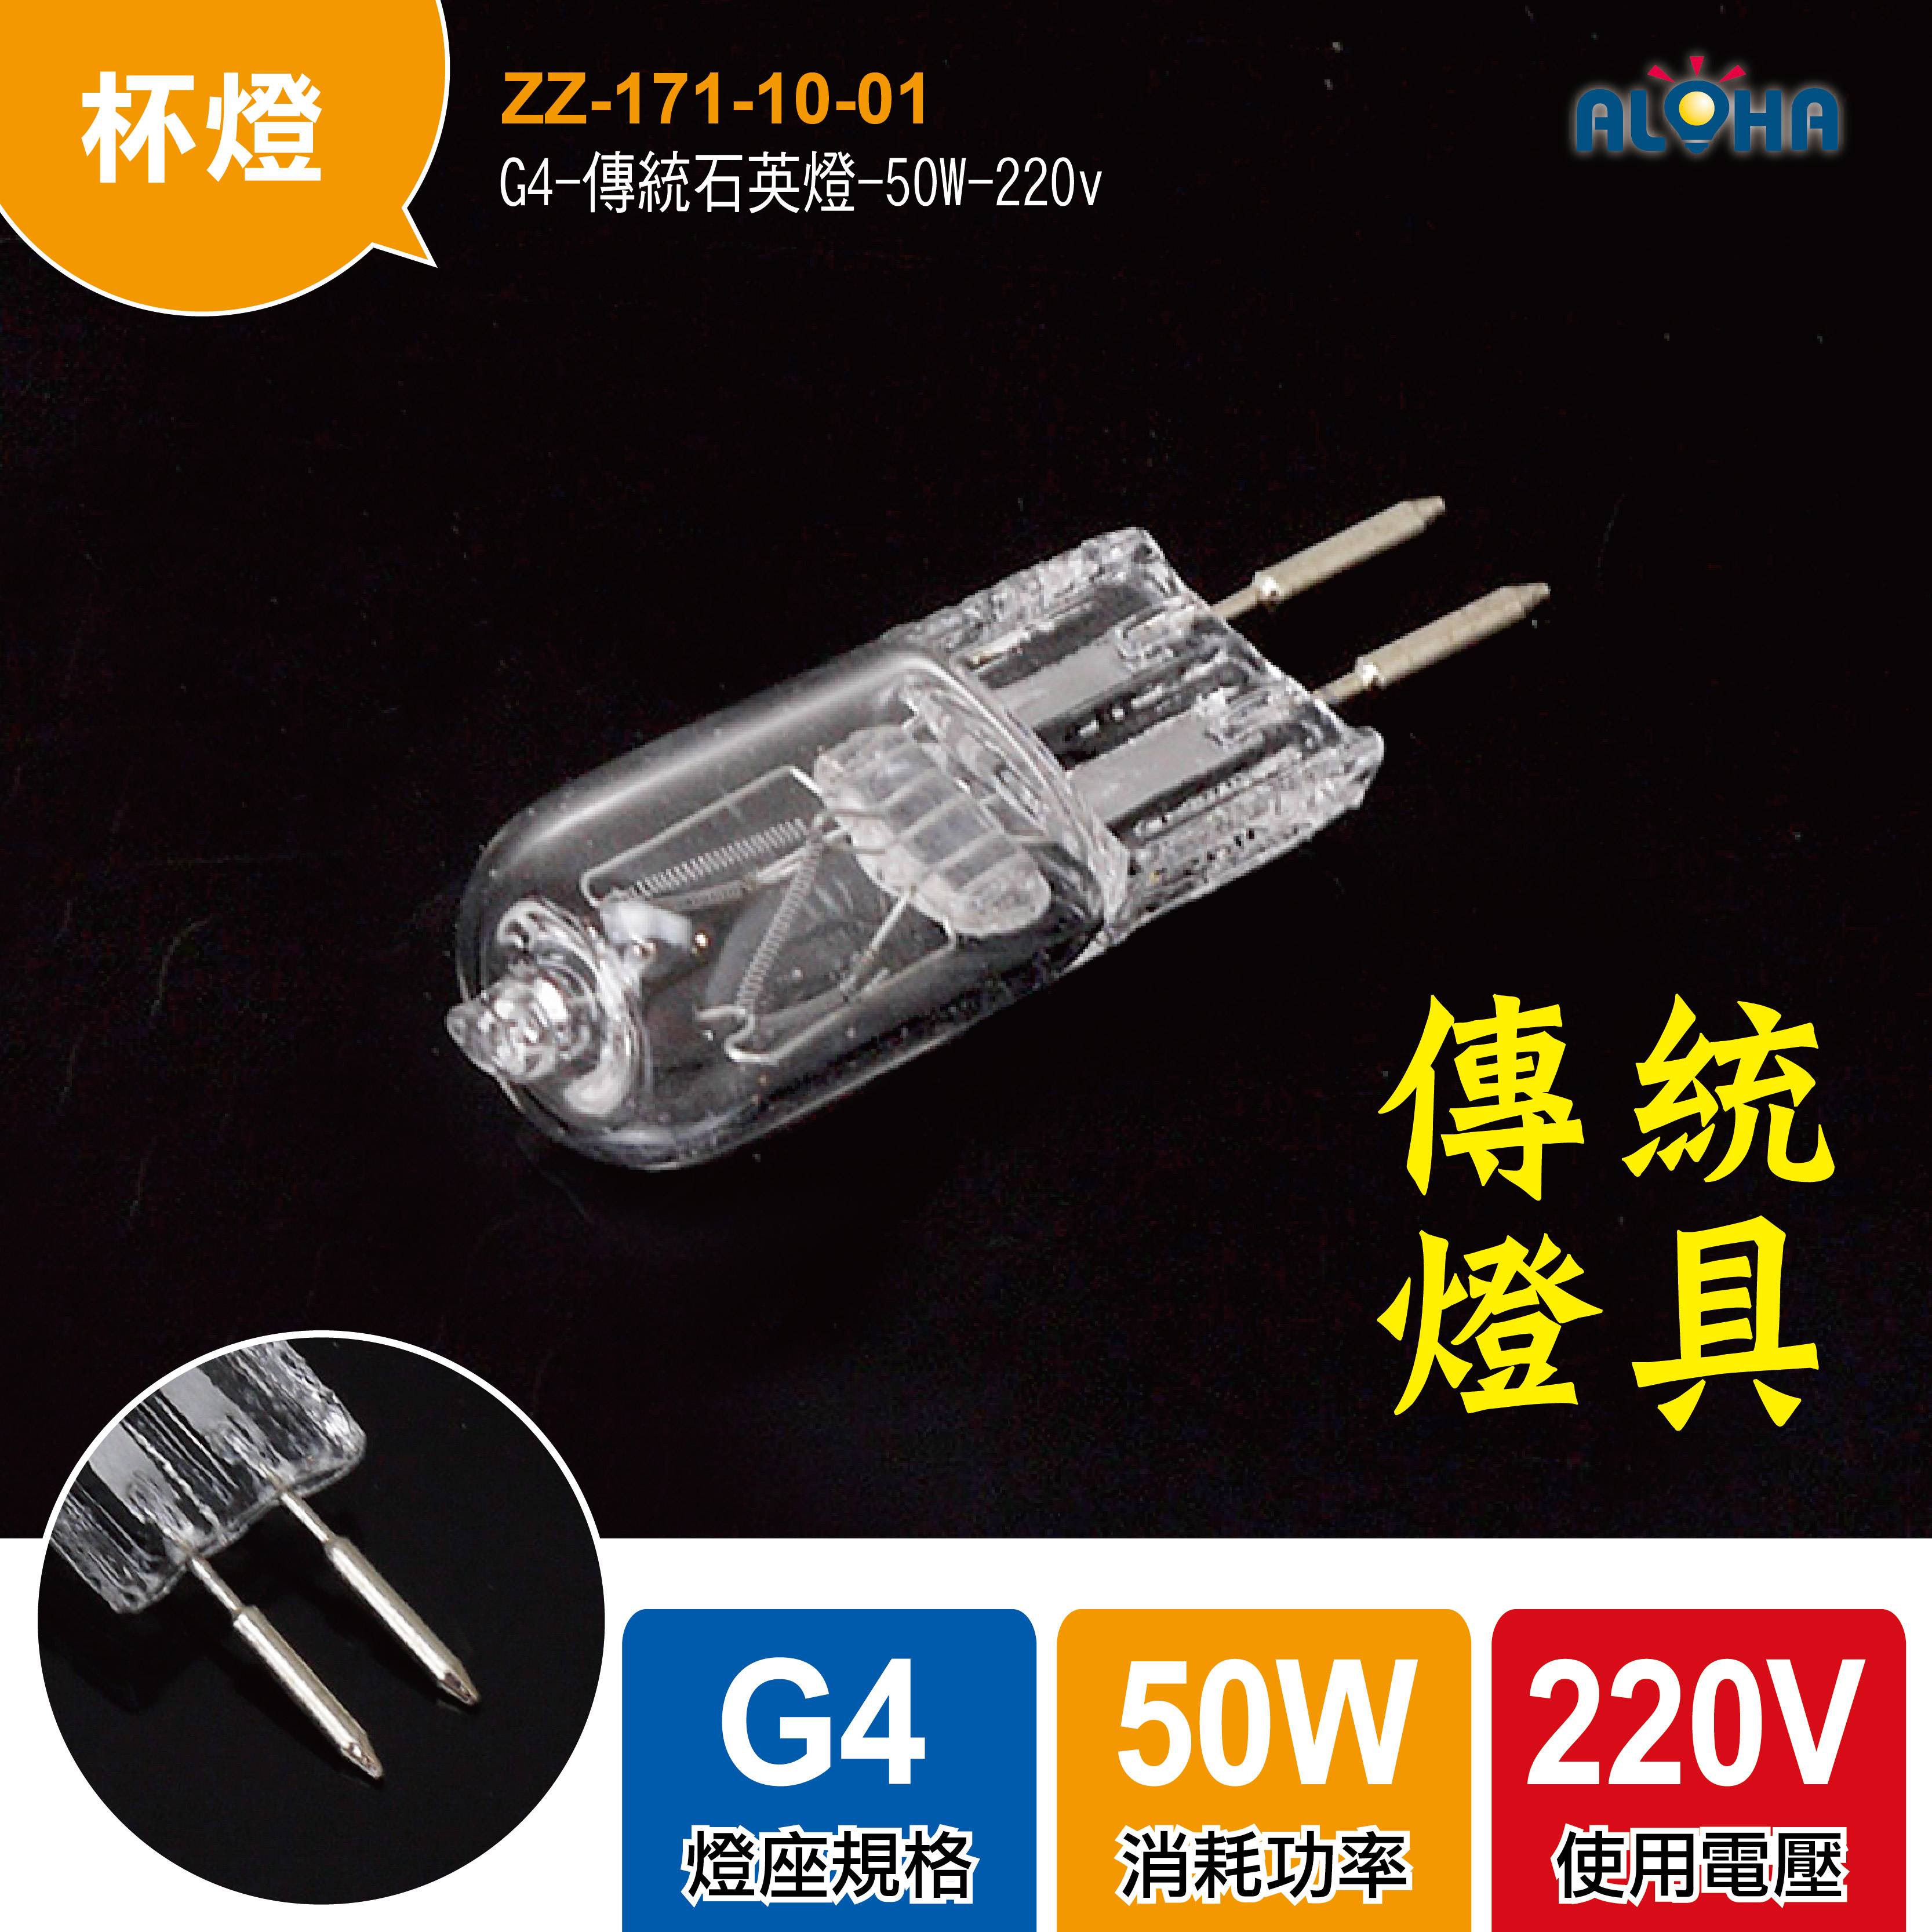 G4-傳統石英燈-50W-220v